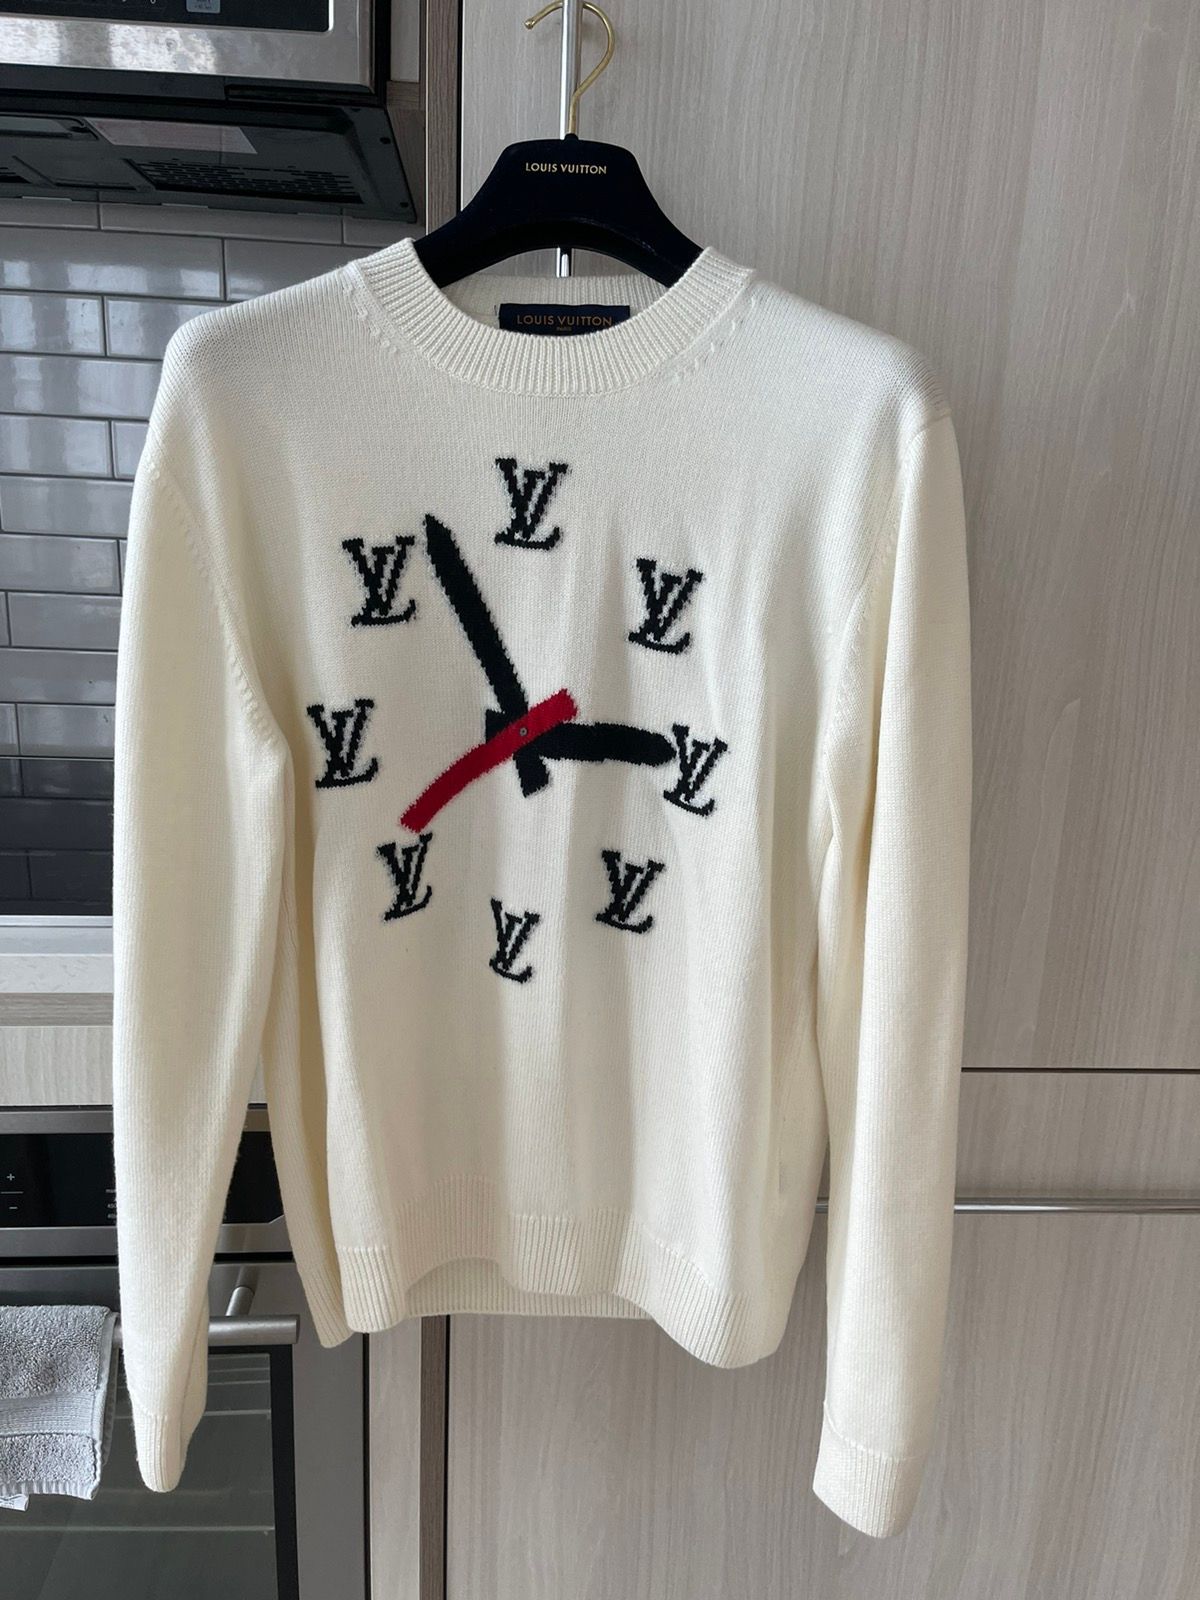 Louis Vuitton Virgil Abloh Clock Intarsia Knit Shirt Sweater Size Large  White